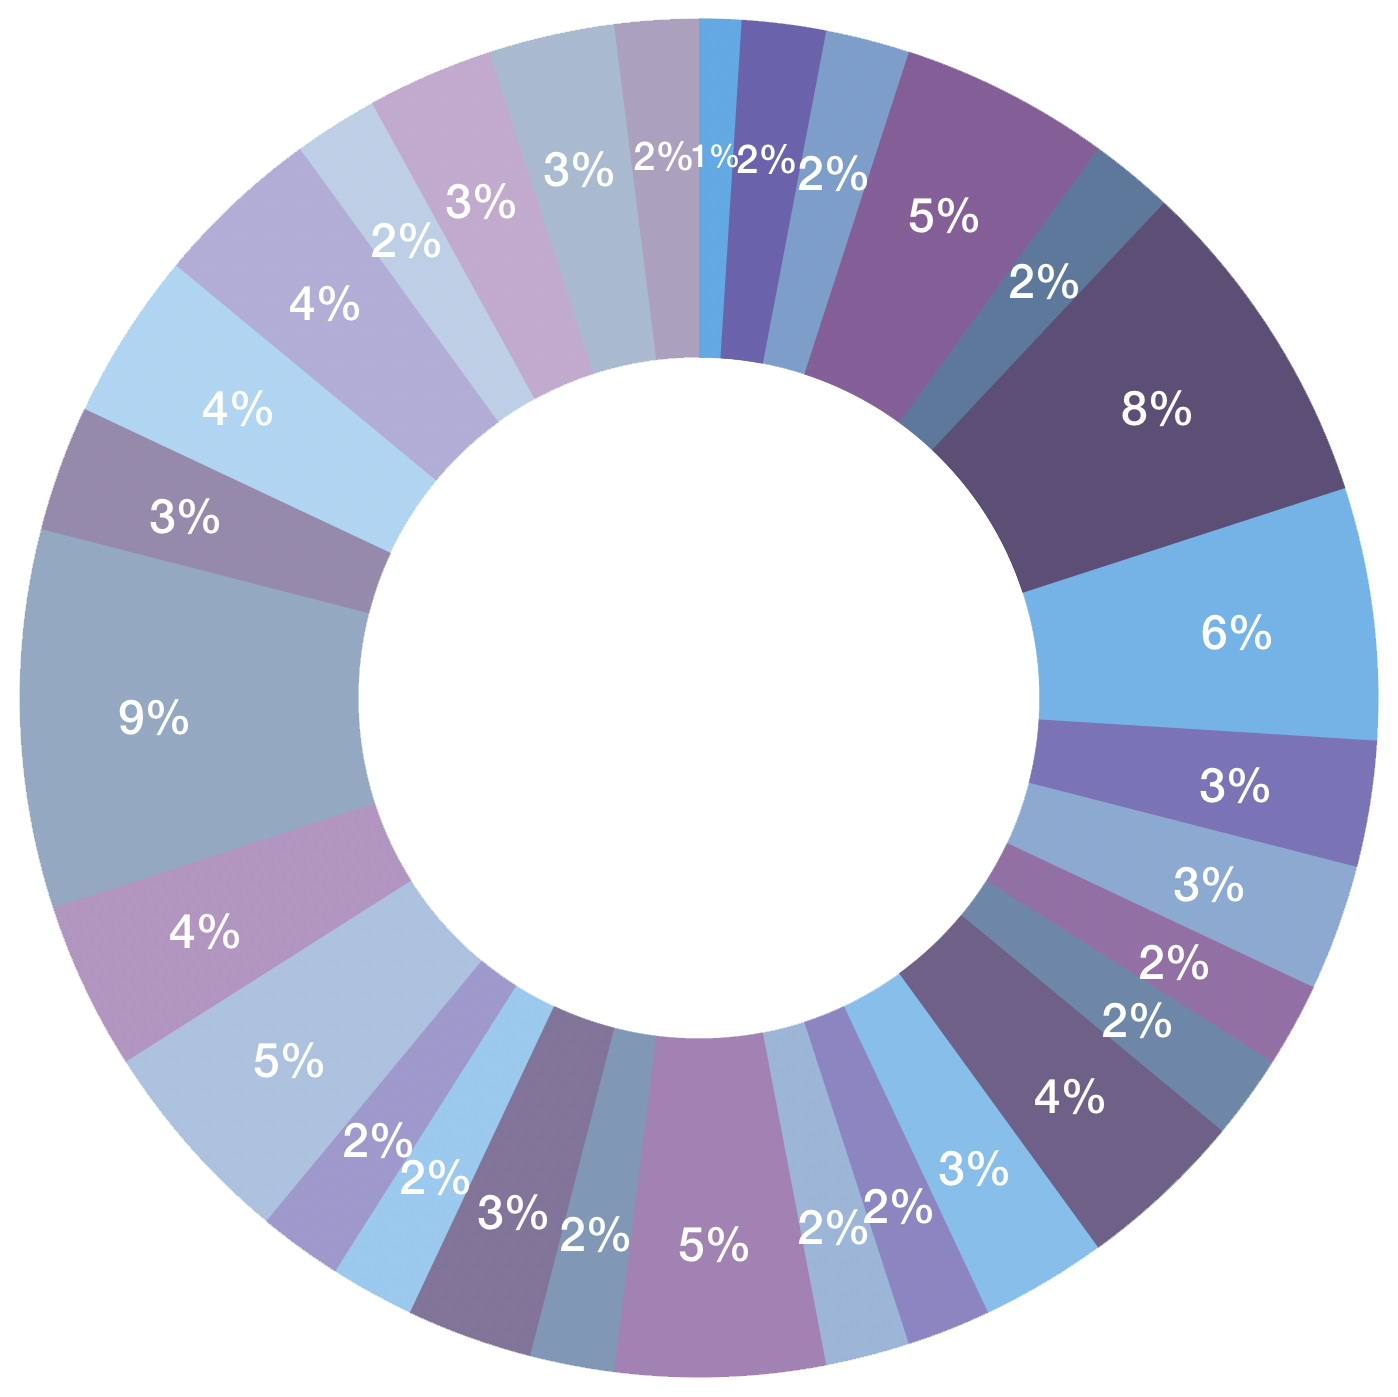 Physics Chapter Distribution Chart